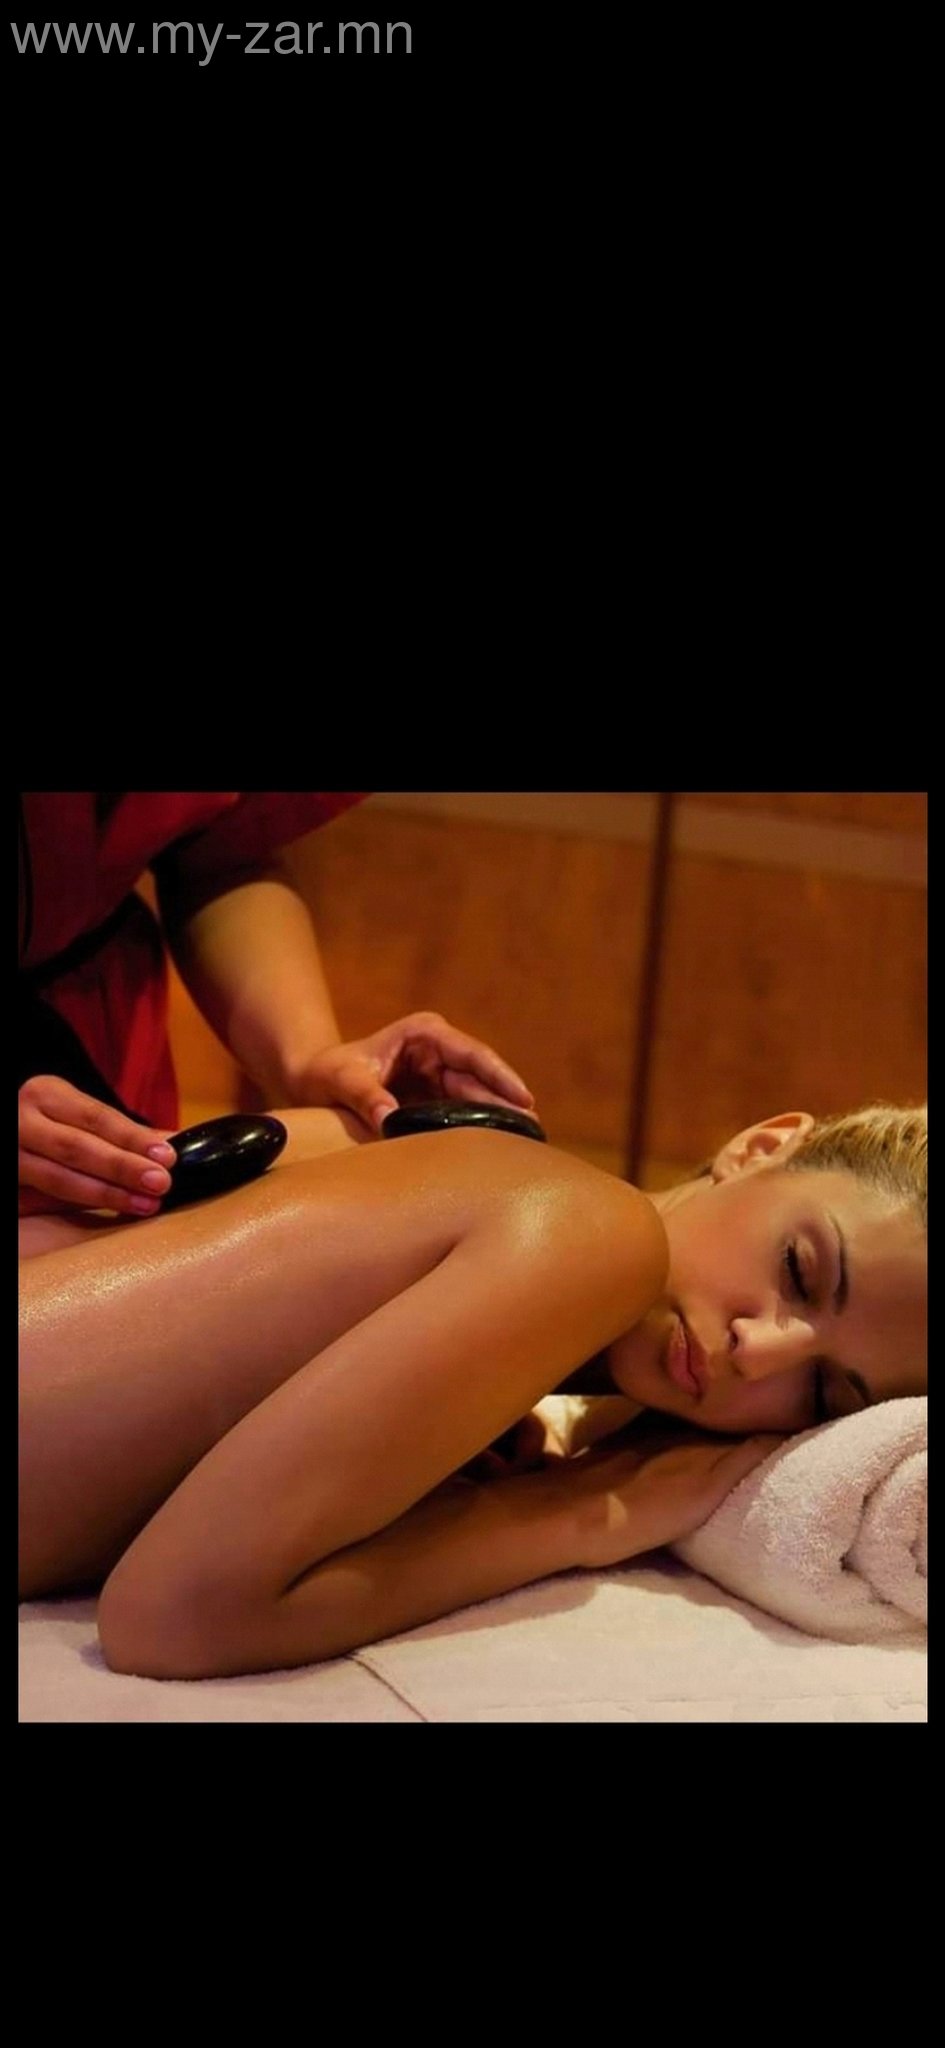 Hot Spa massage ajilaal tailah massage haluun toson massage bie ugaalga ajilj bn